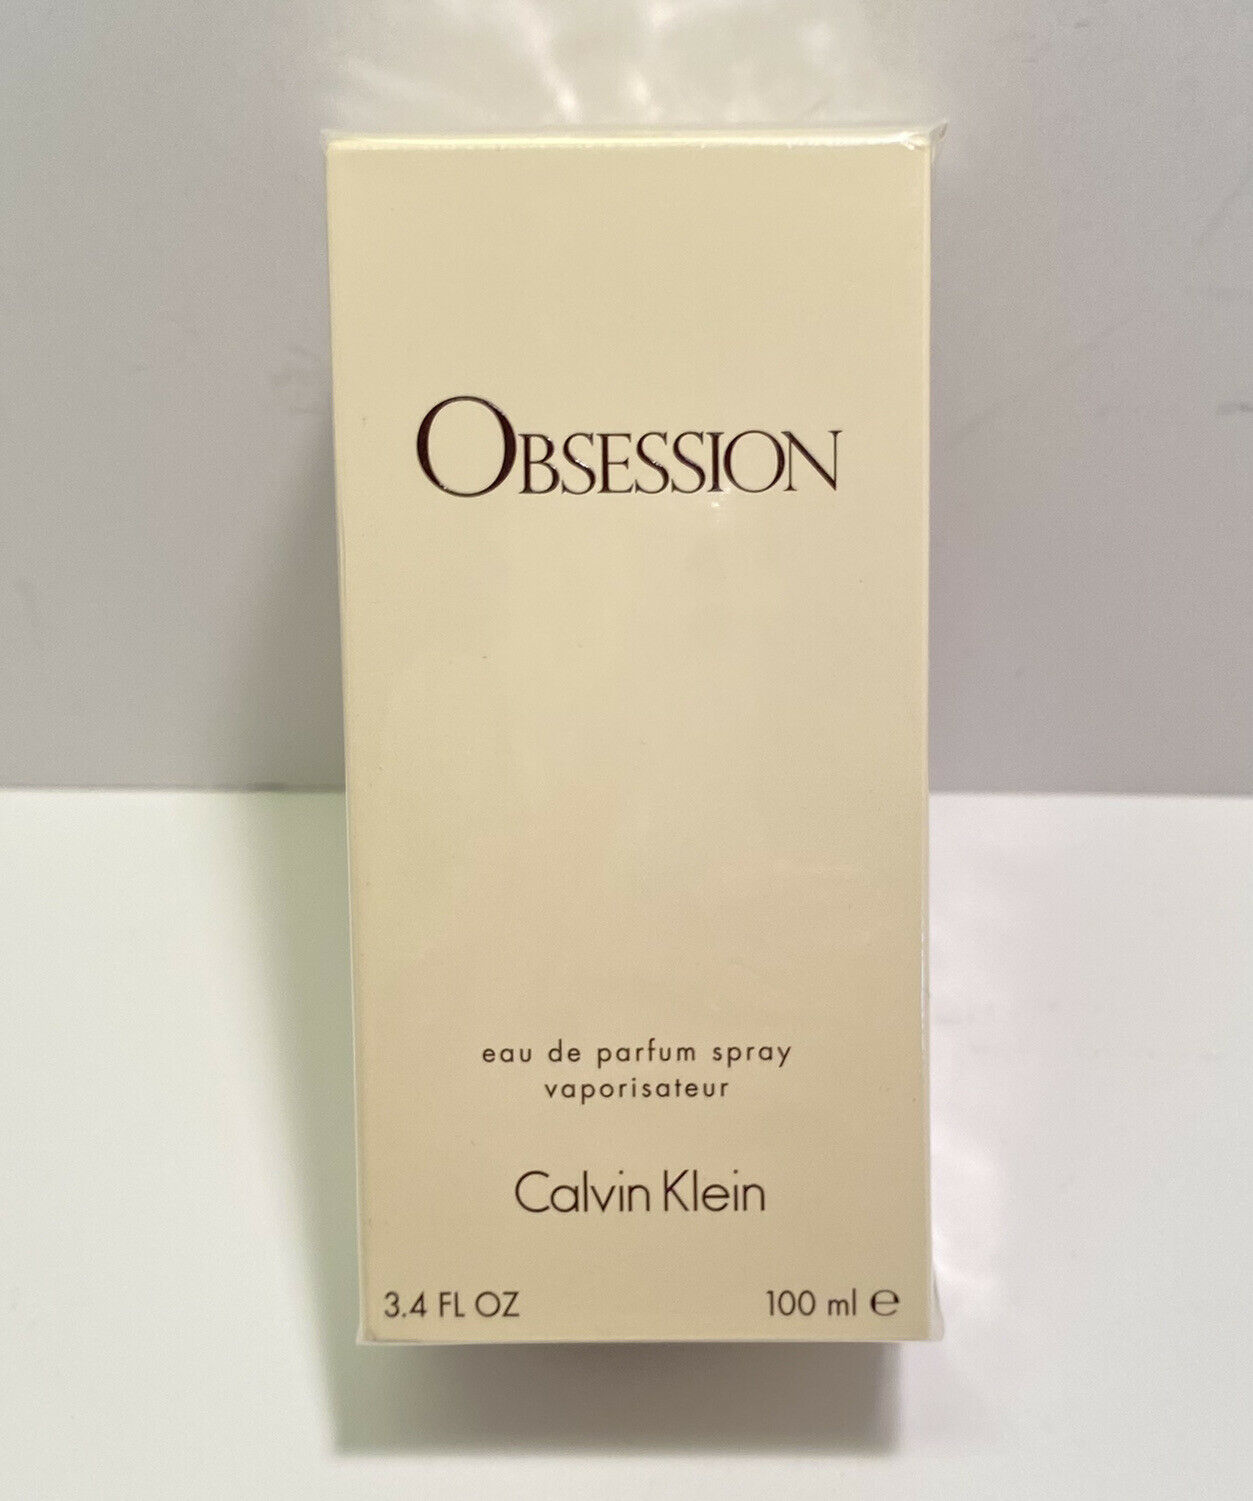 Primary image for Calvin Klein Obession Eau De Parfum Spray 3.4 oz 100 ml New Sealed in Box USA